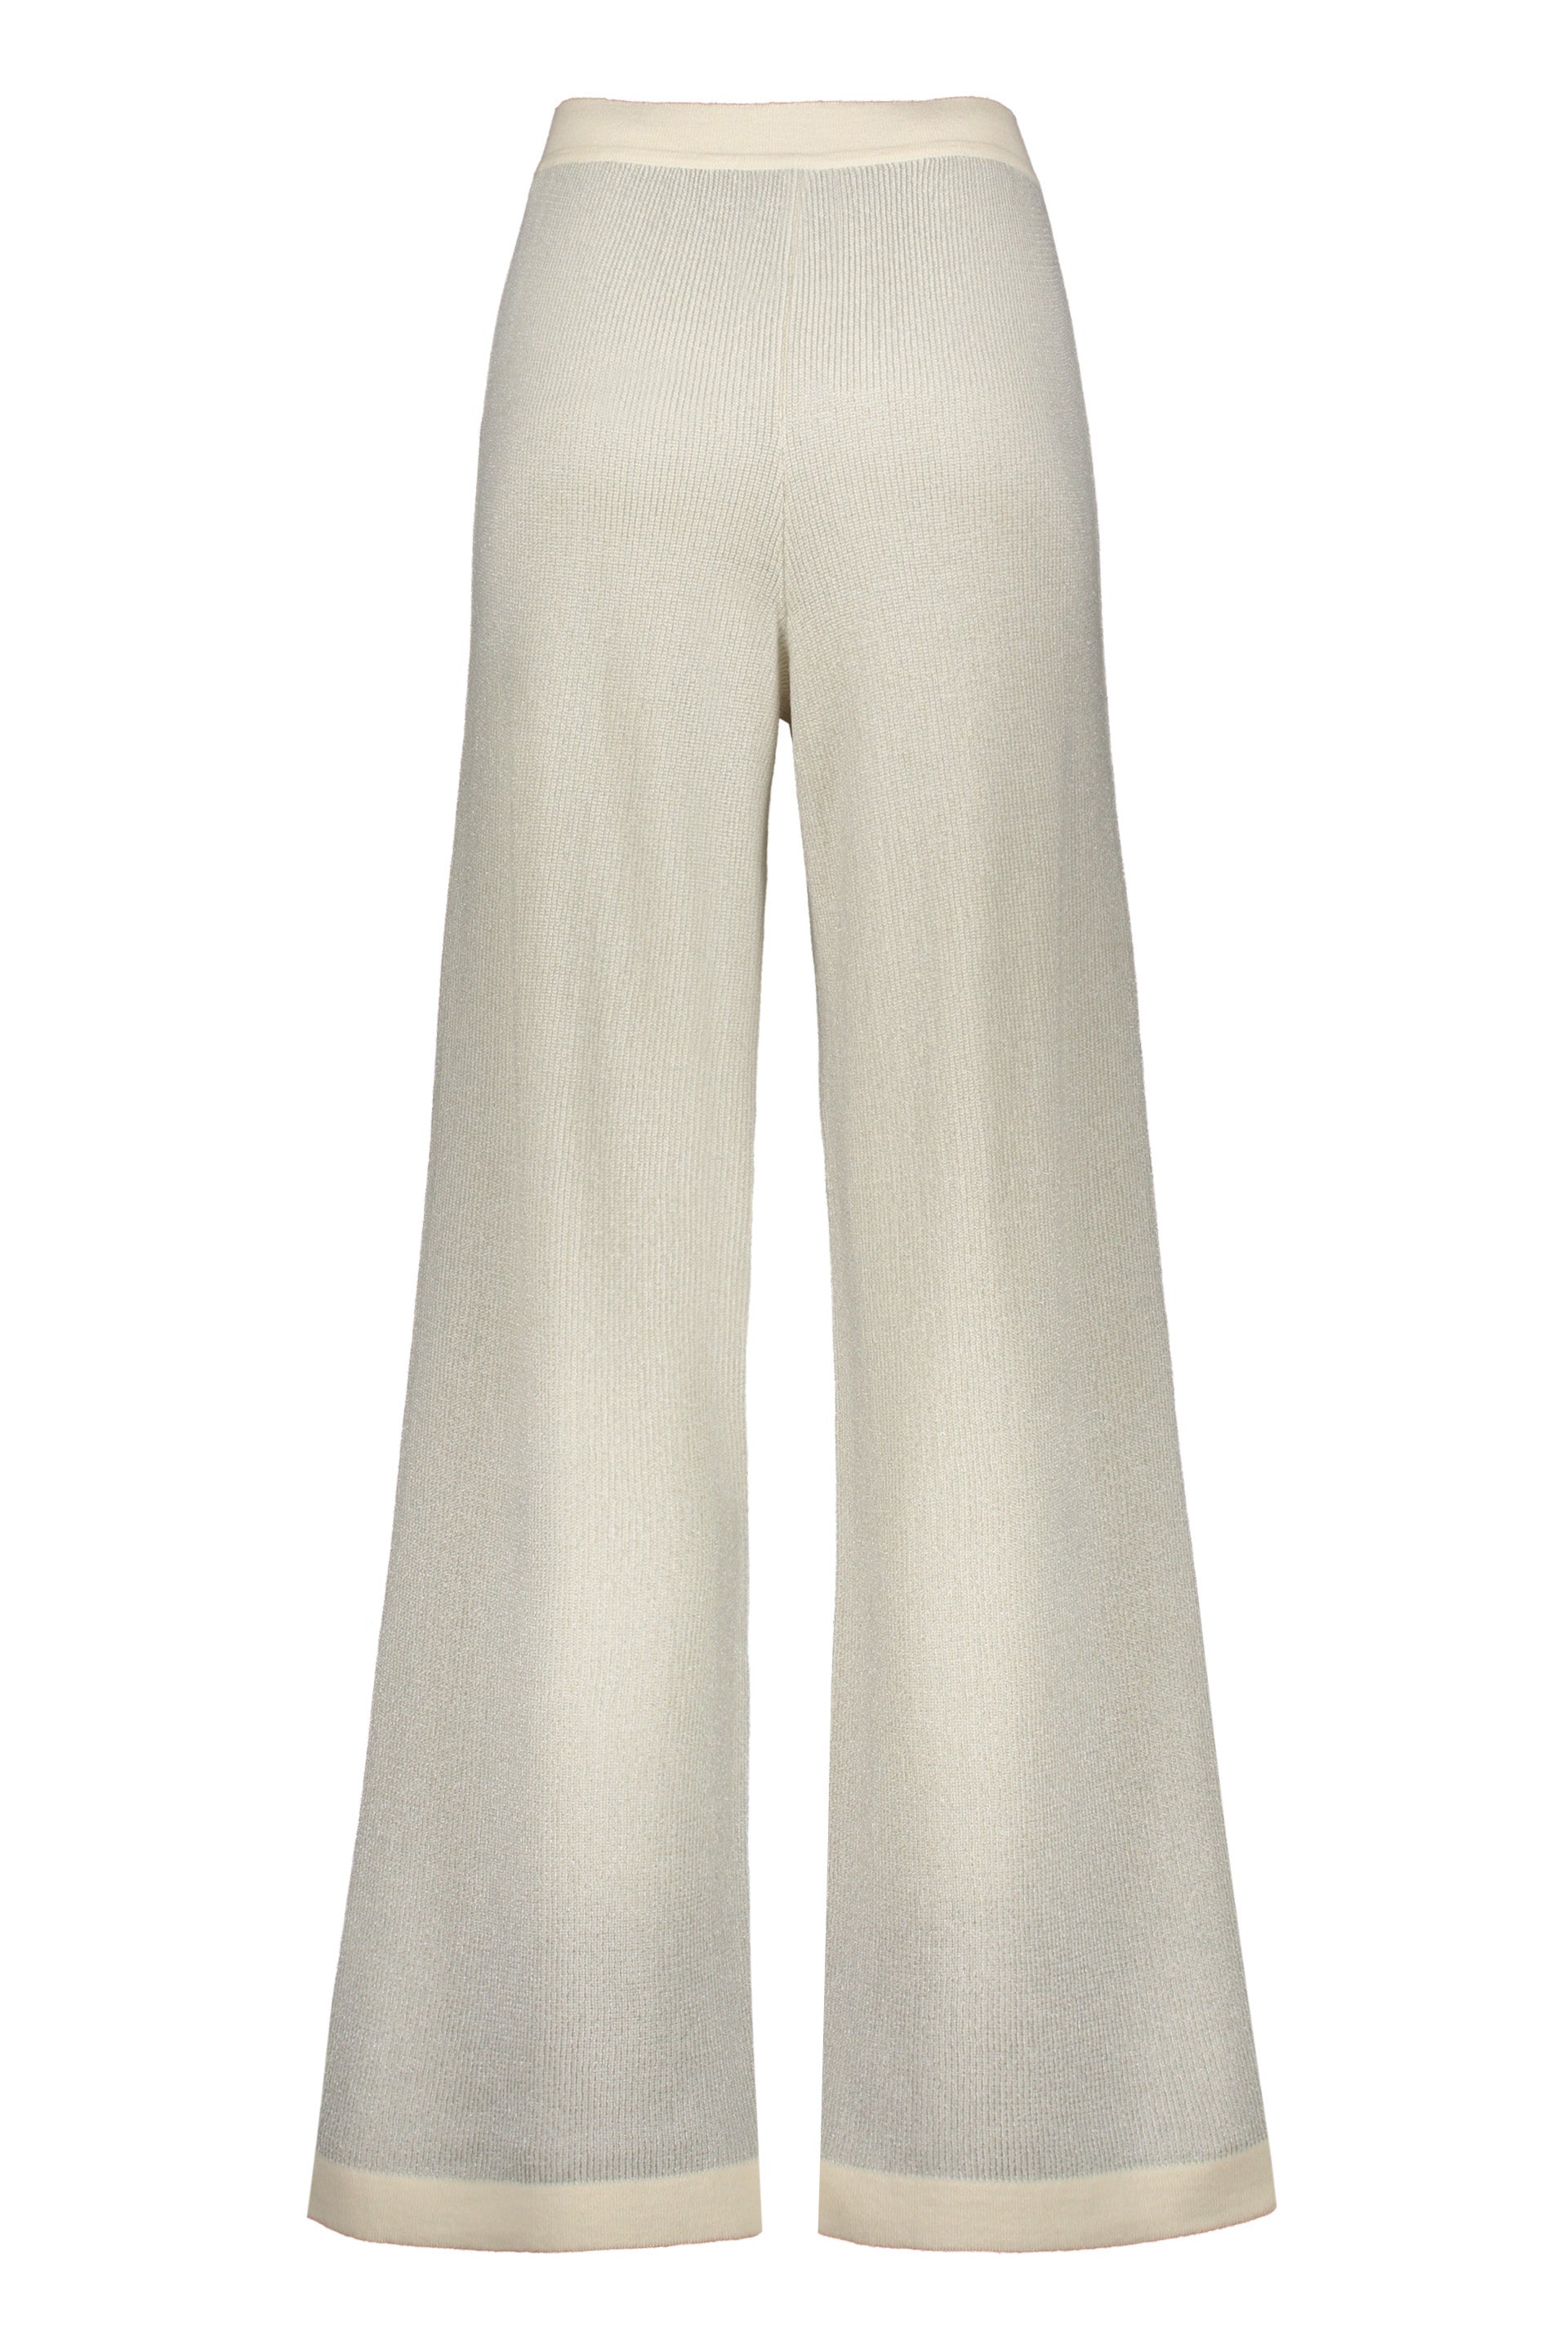 Missoni-OUTLET-SALE-Lurex-knit-trousers-Hosen-42-ARCHIVE-COLLECTION-2.jpg